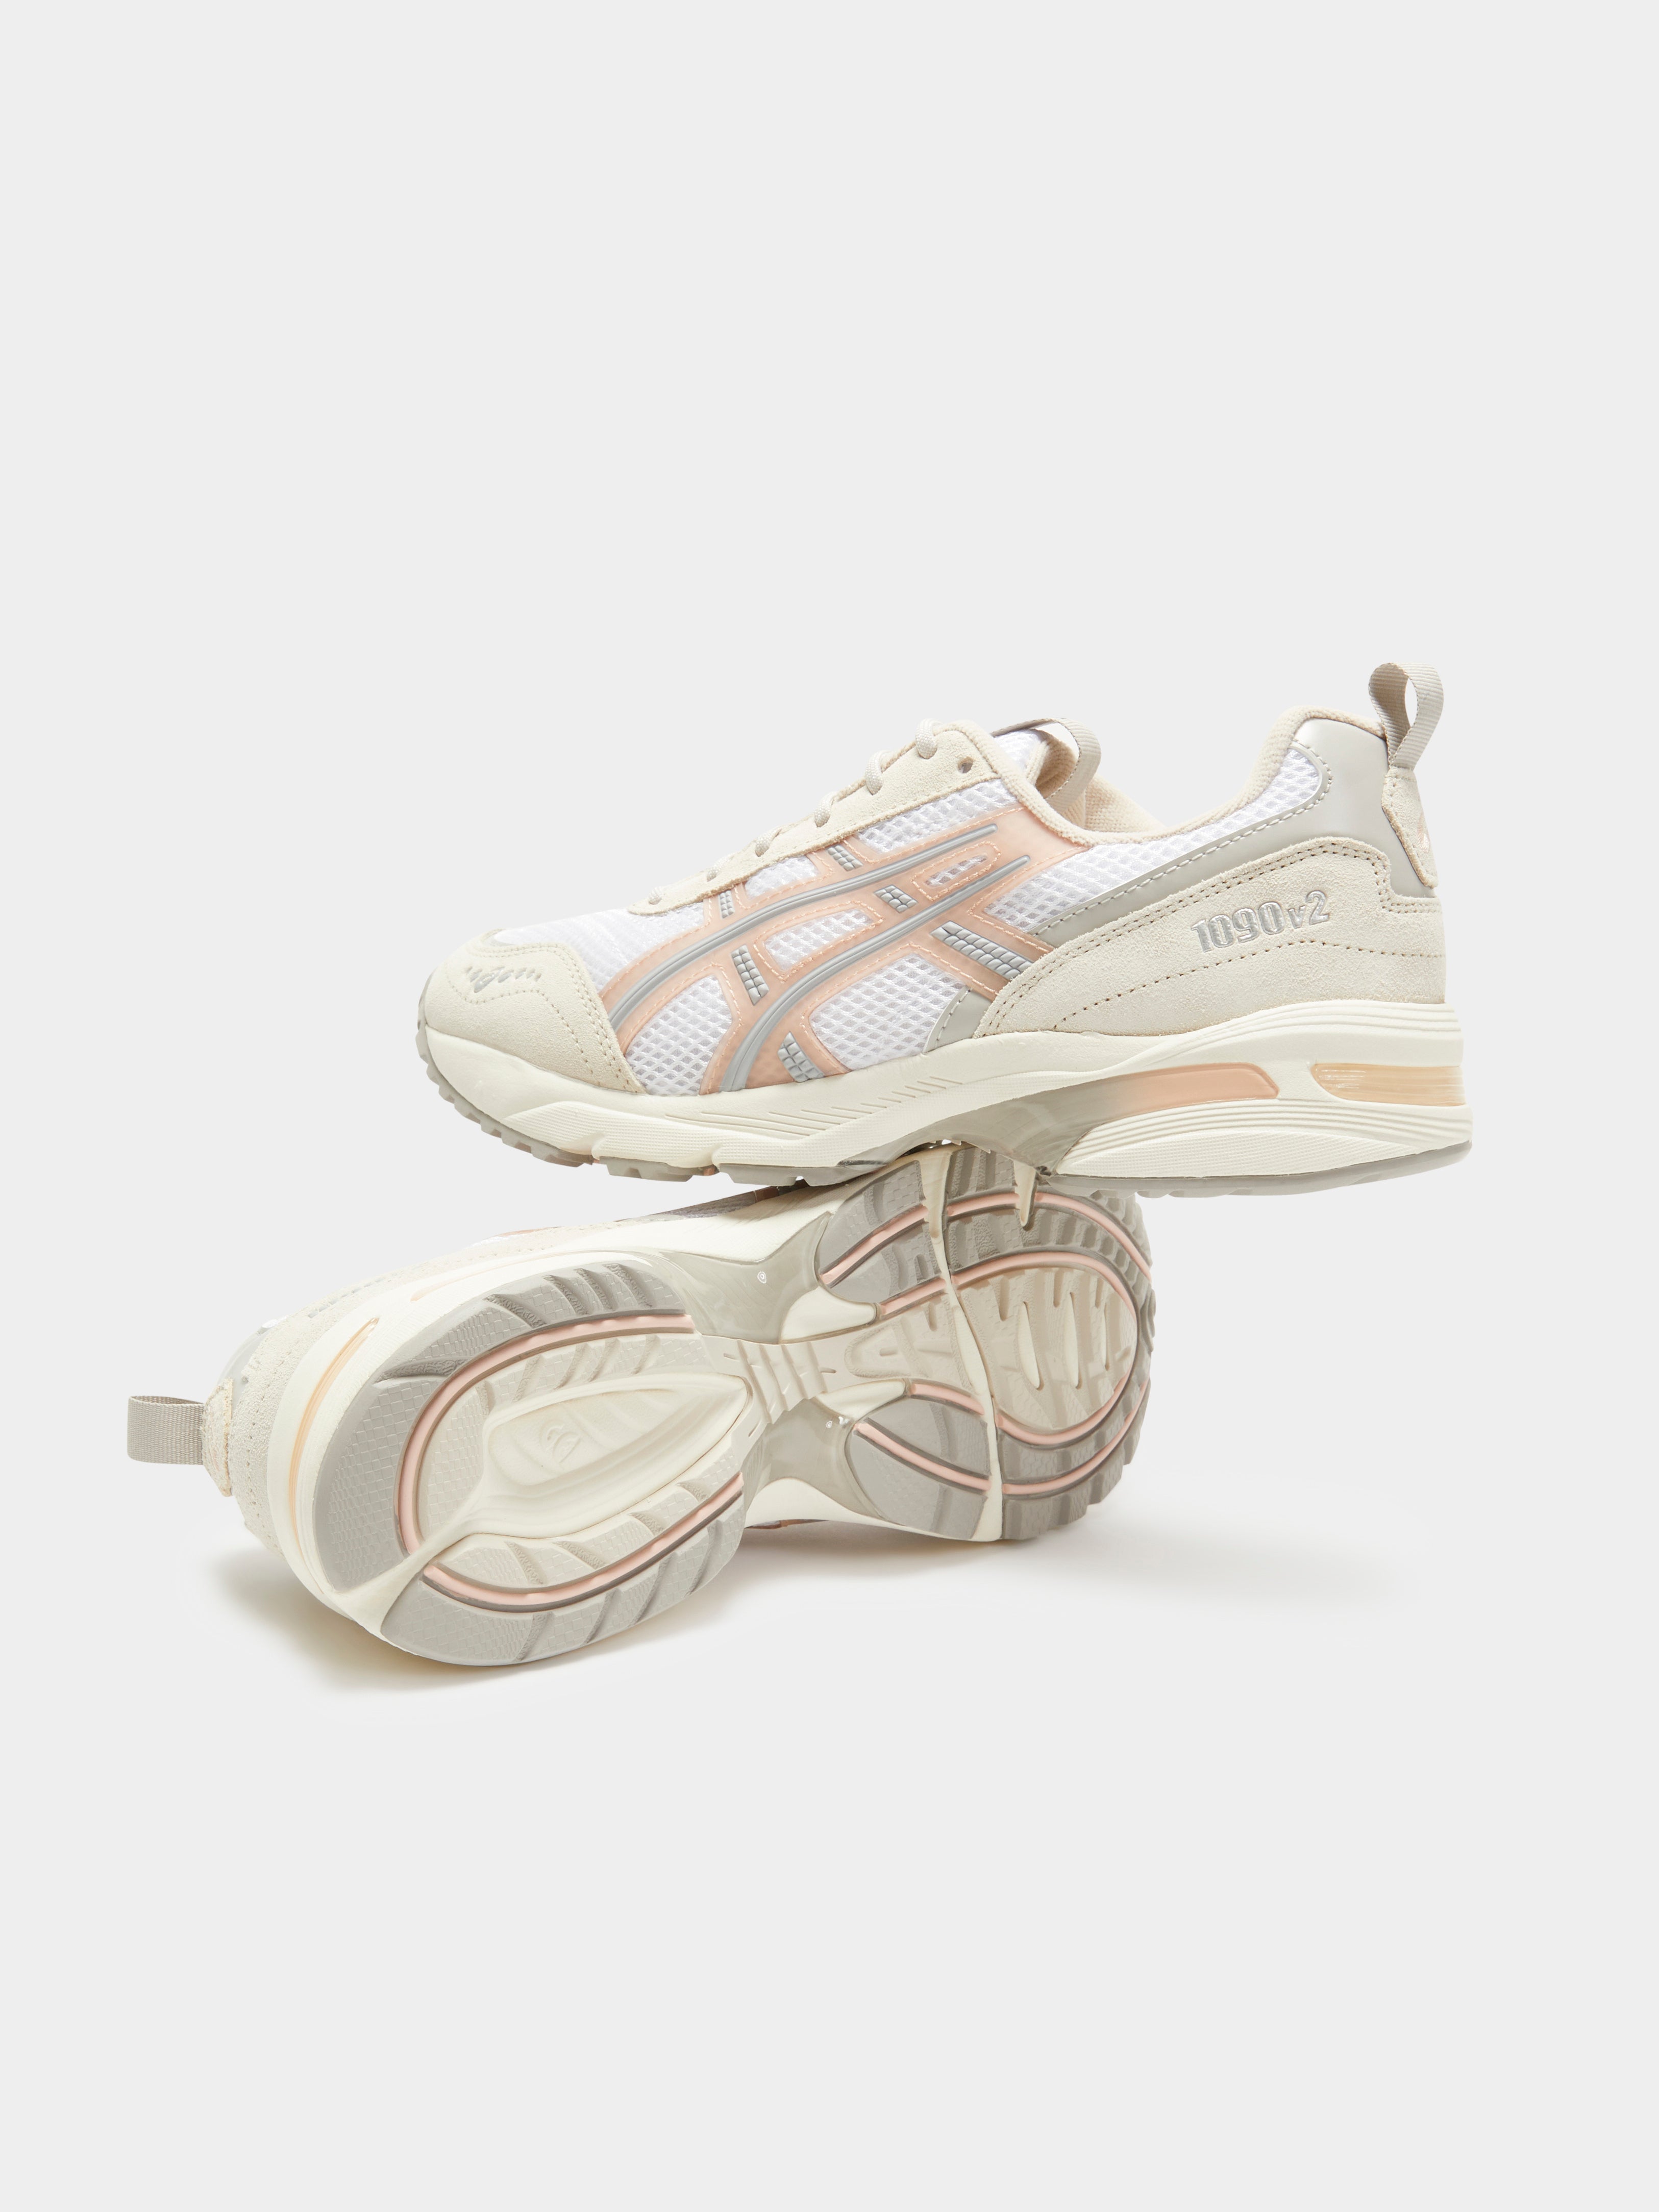 Womens Gel-1090 V2 Sneakers in White & Pink